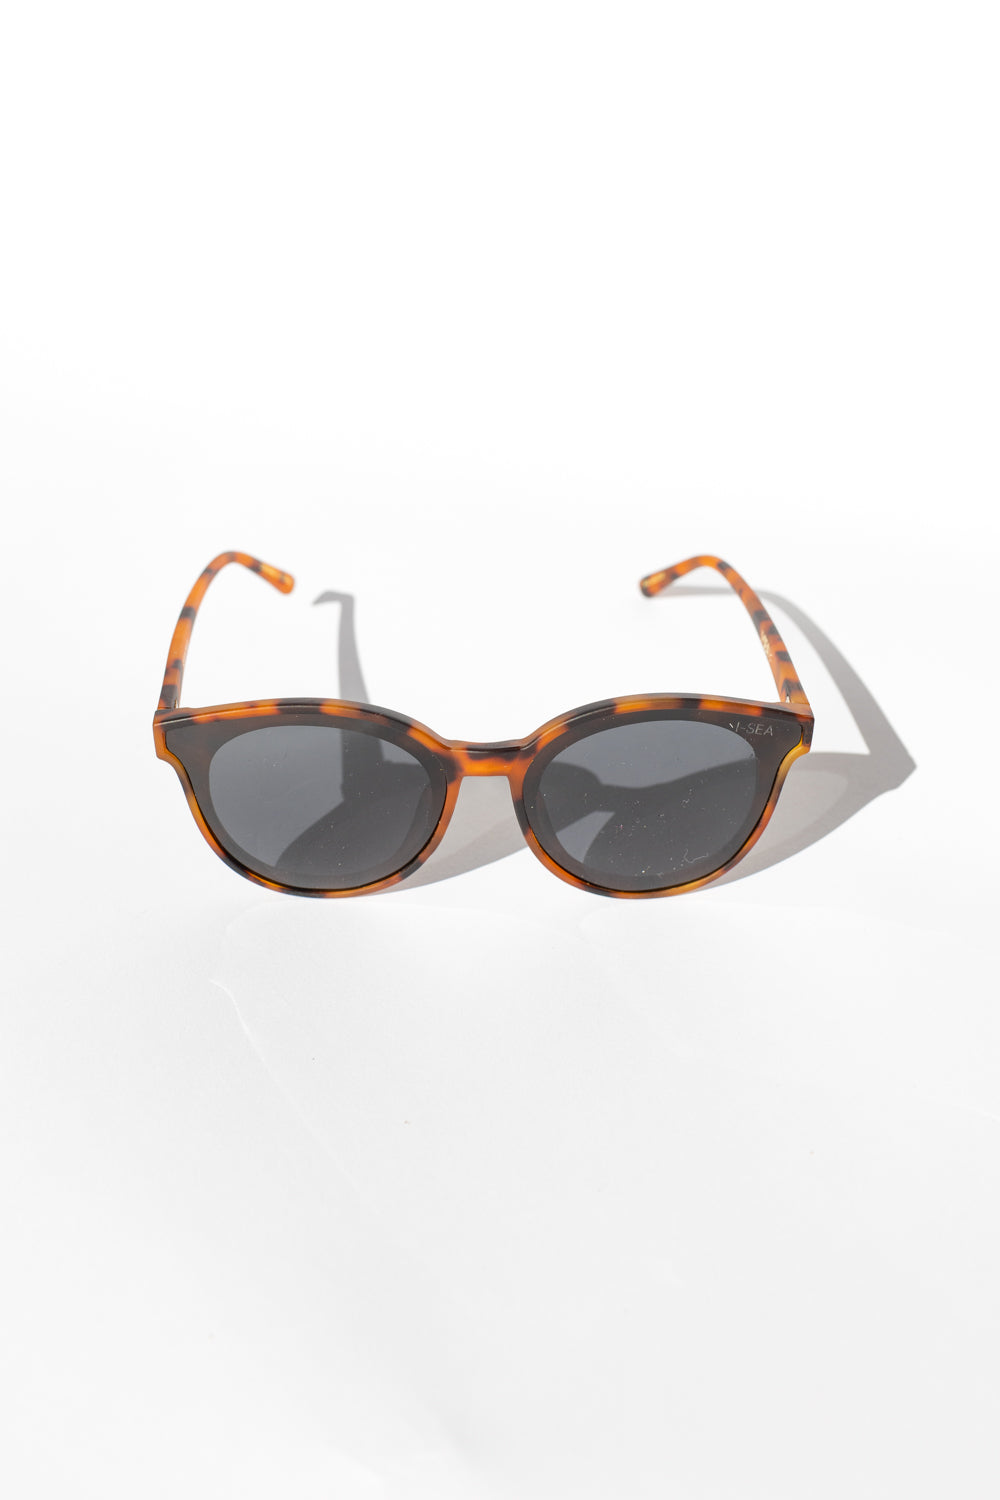 snow tort sunglasses